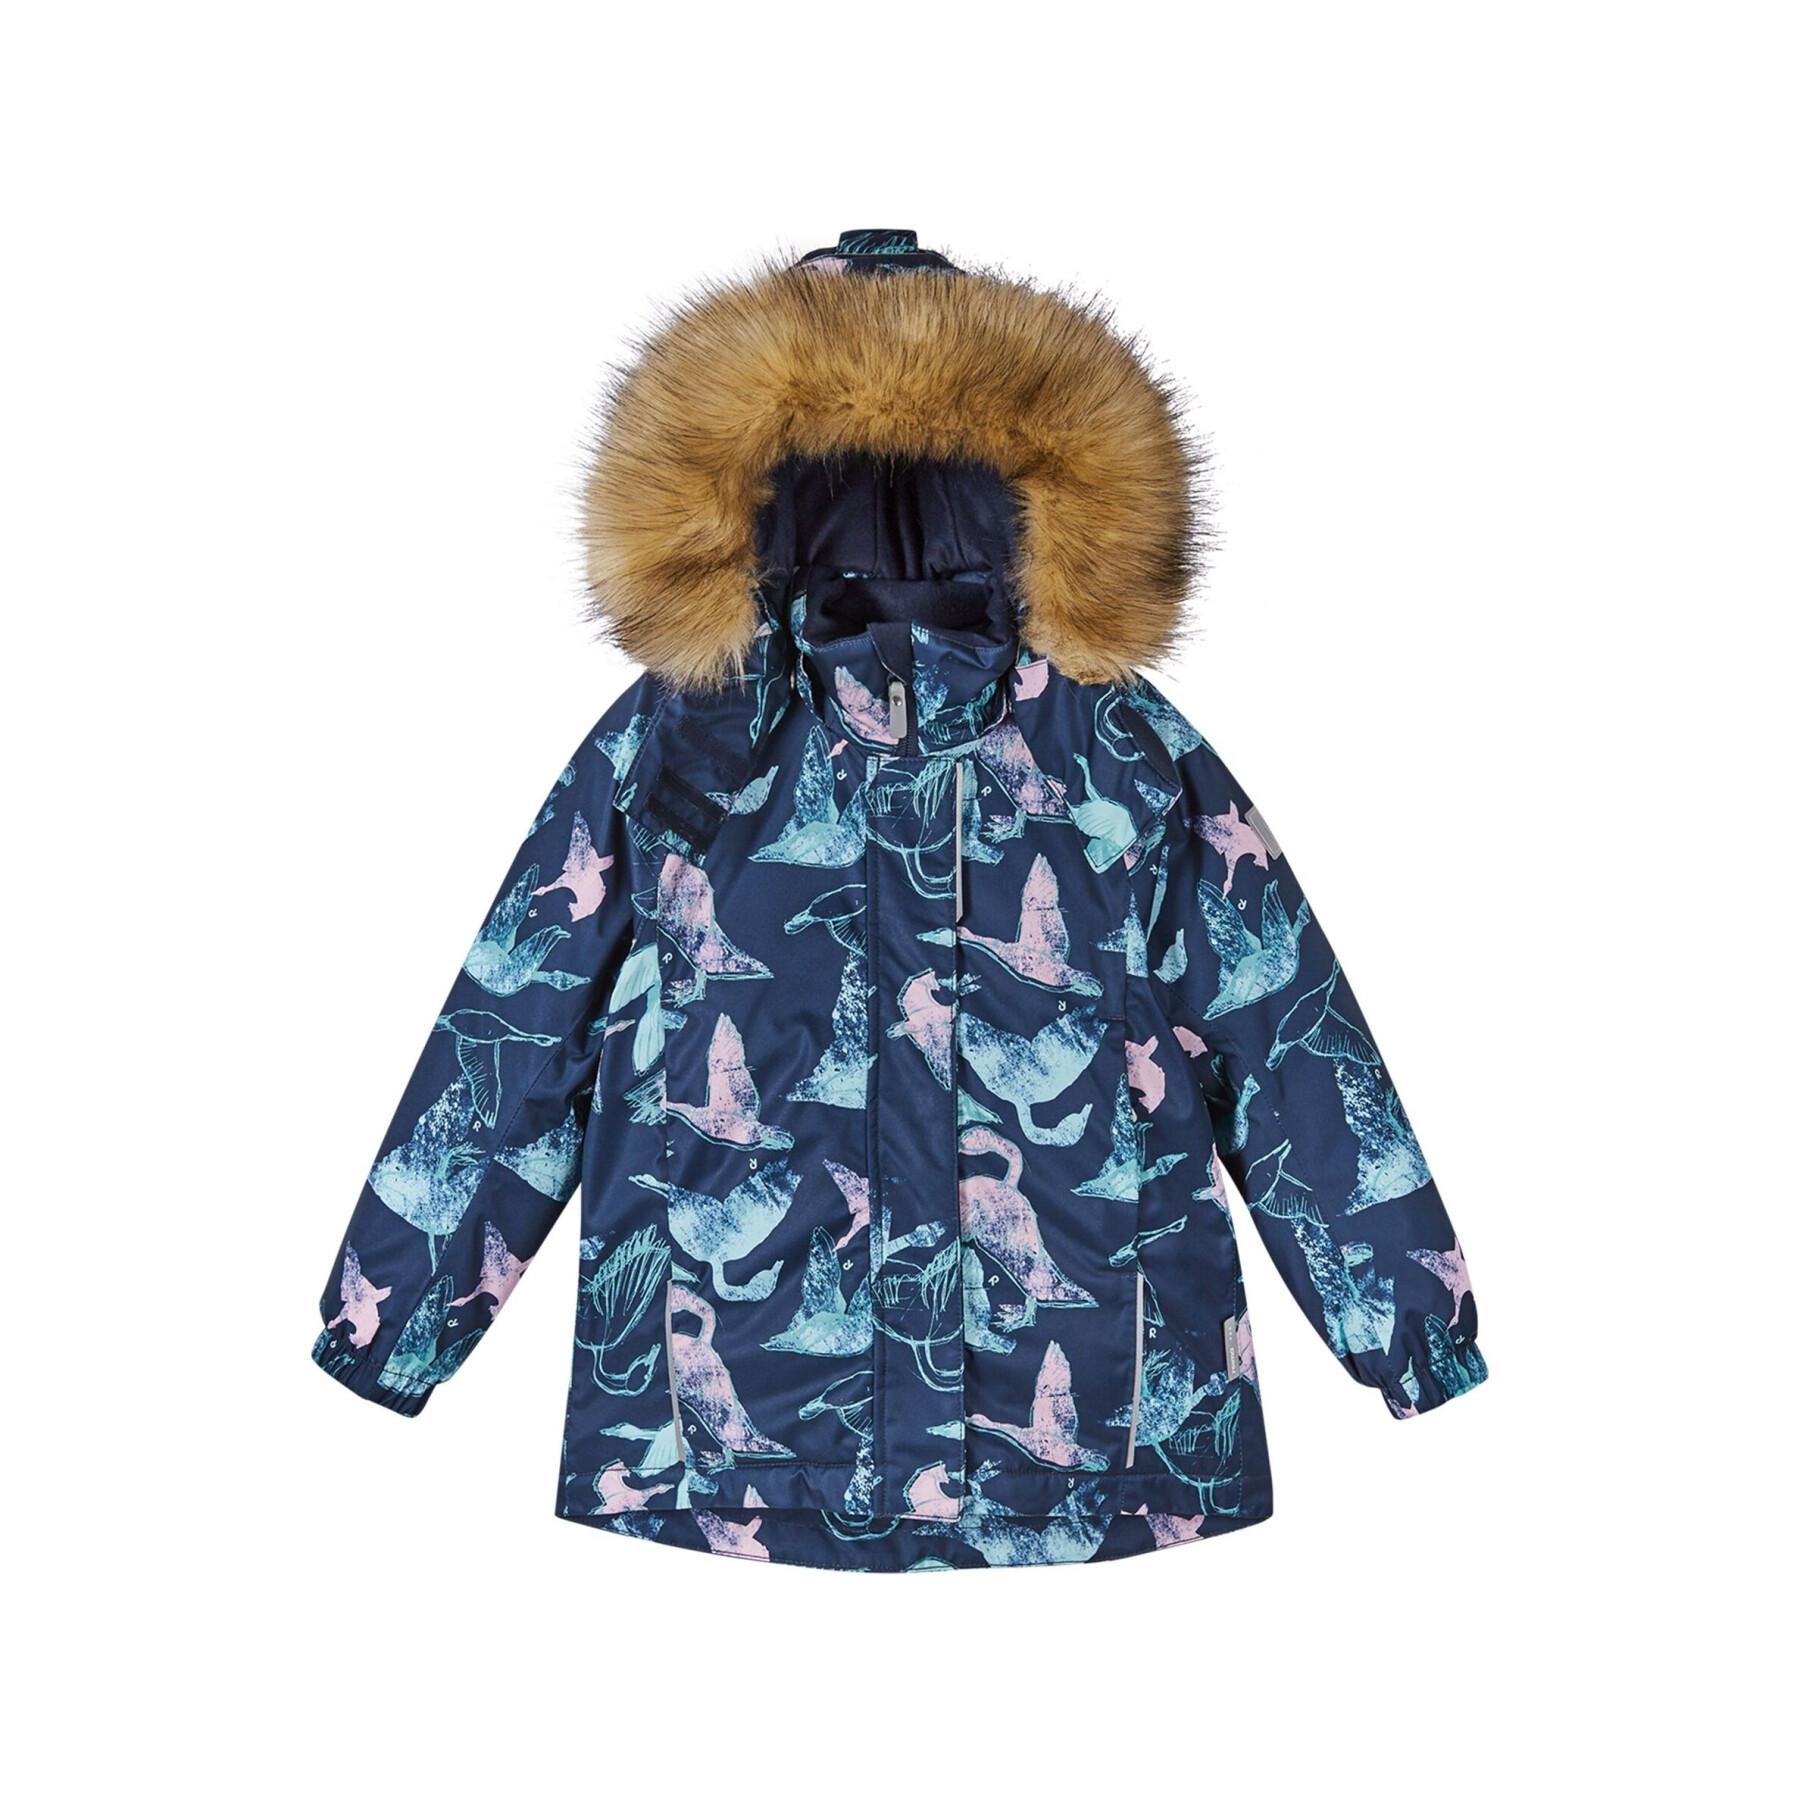 Waterproof jacket for children Reima Reima tec Kiela